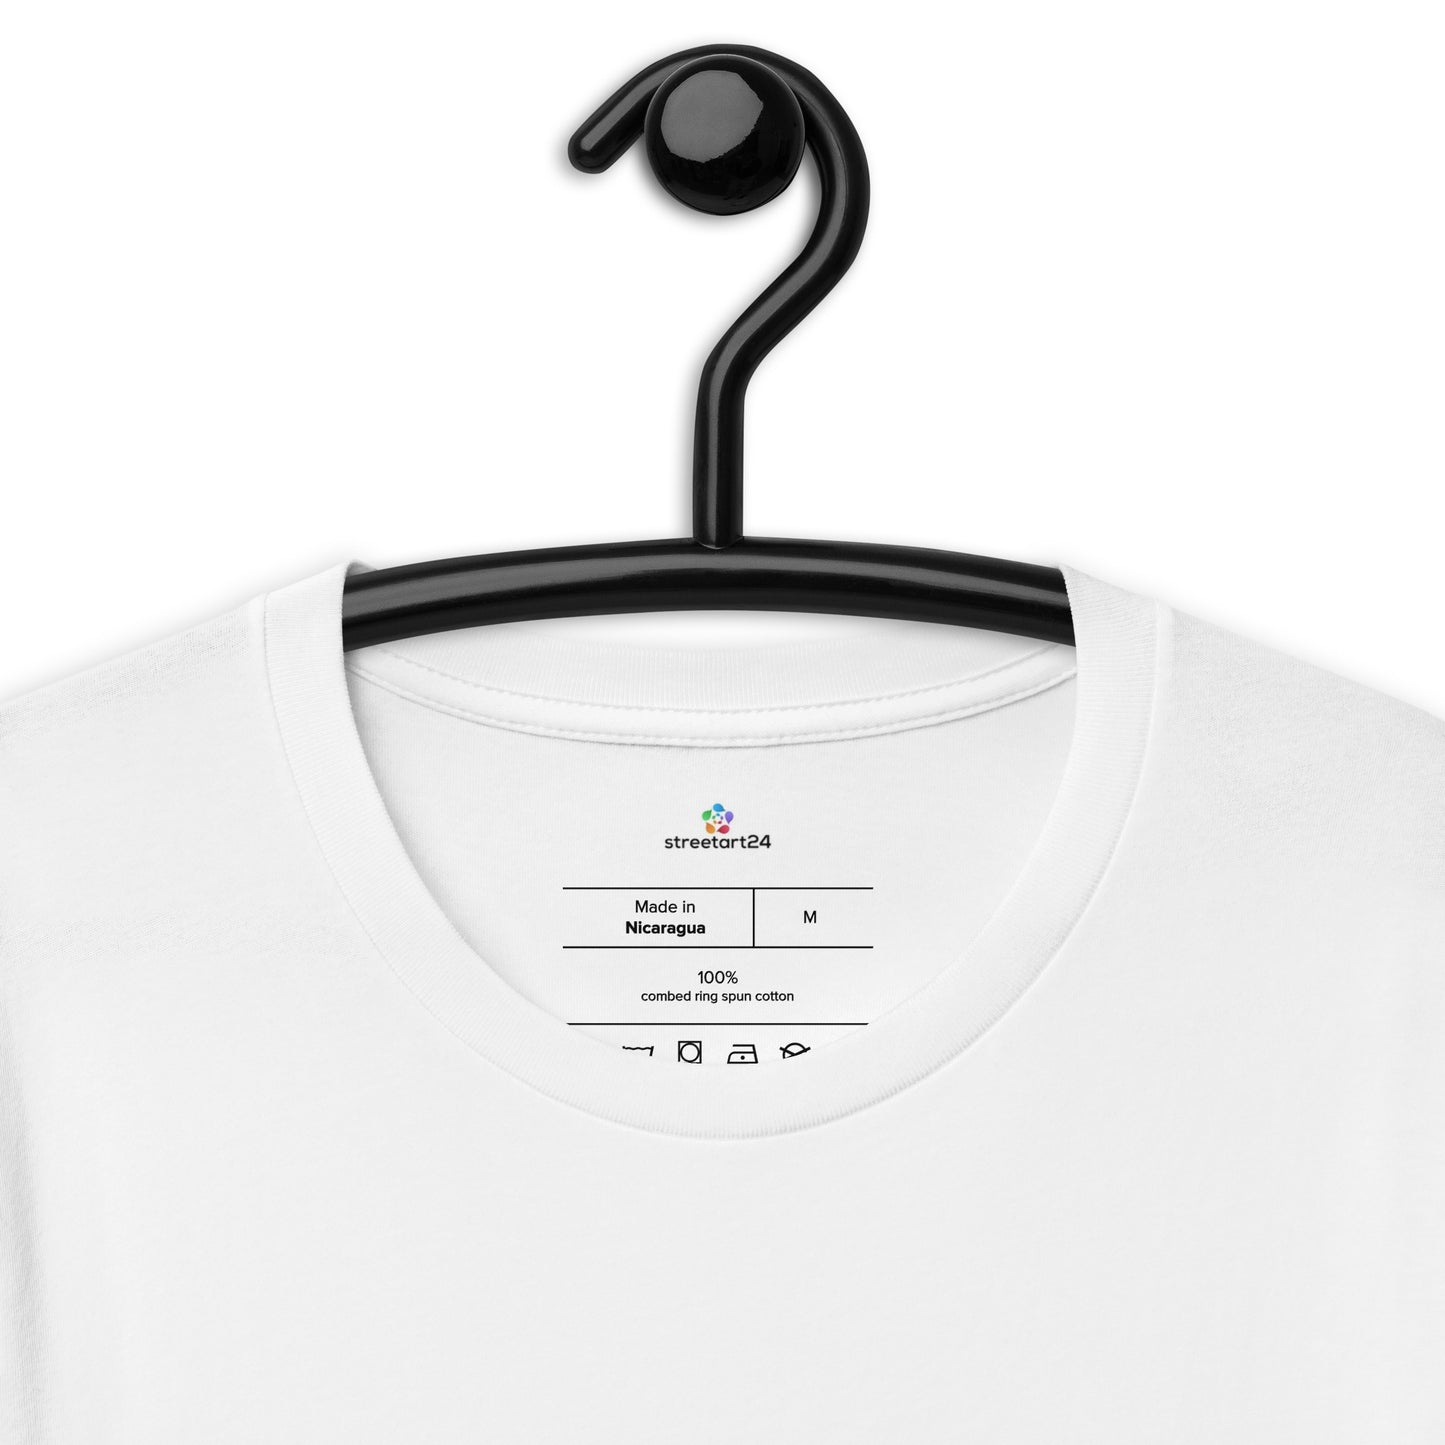 Camiseta de manga corta unisex " Collage de Roma" 100% algodón Arte Impreso varios colores